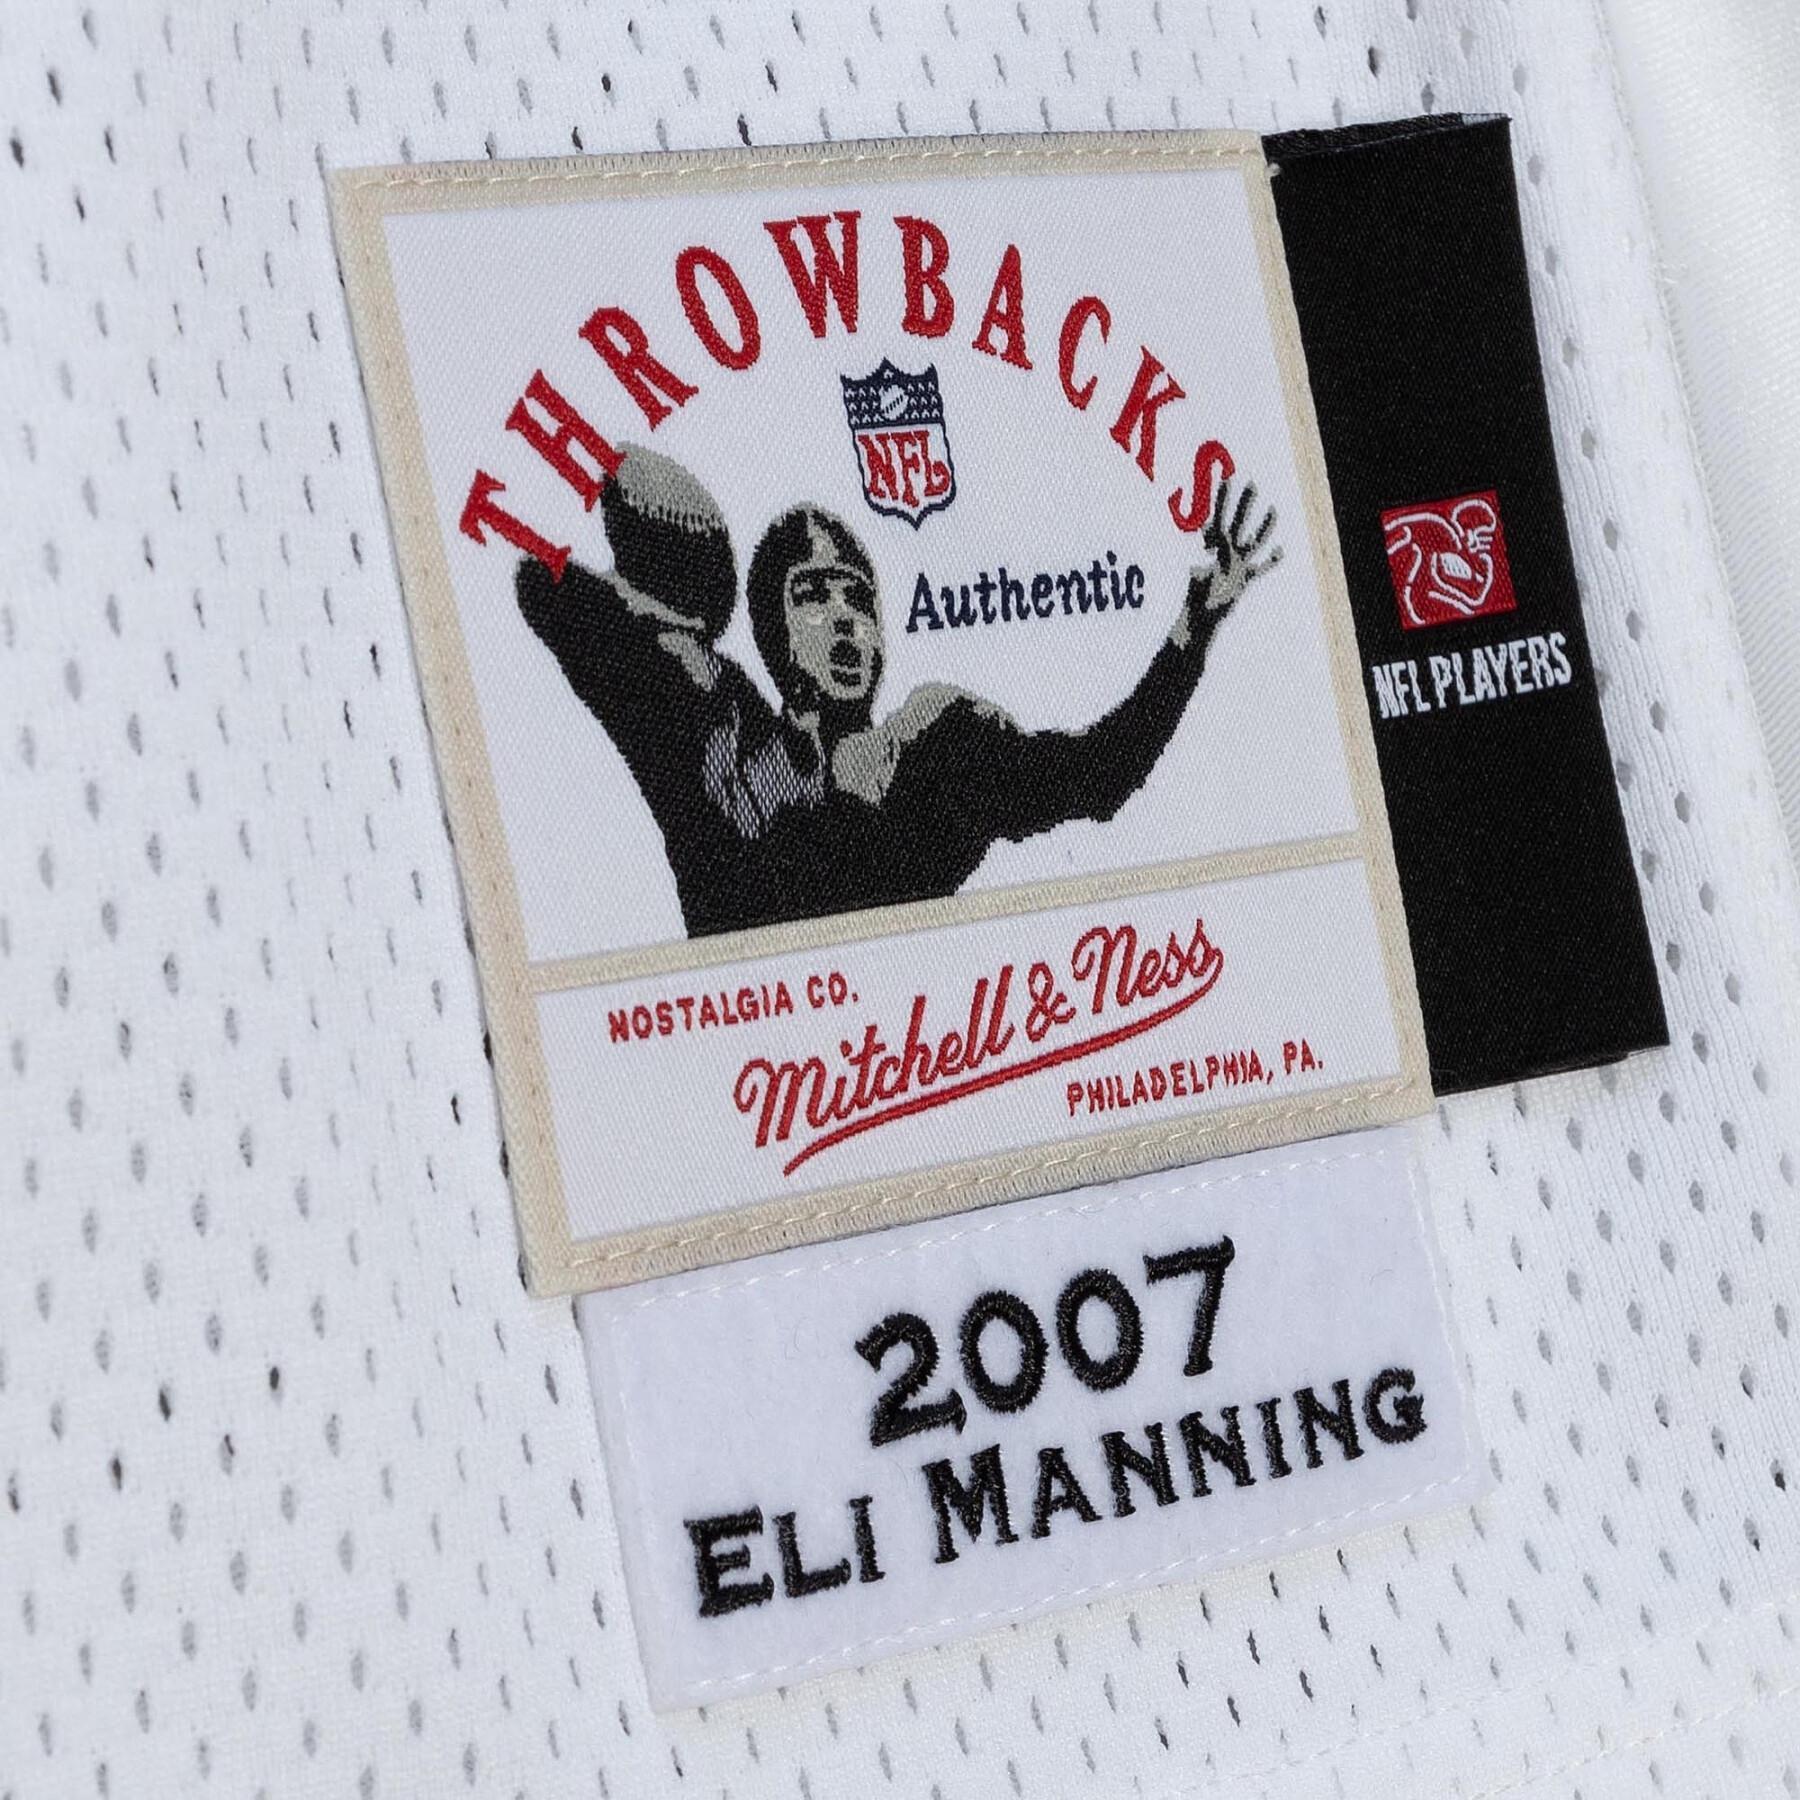 Camiseta auténtica New York Giants Eli Manning 2007